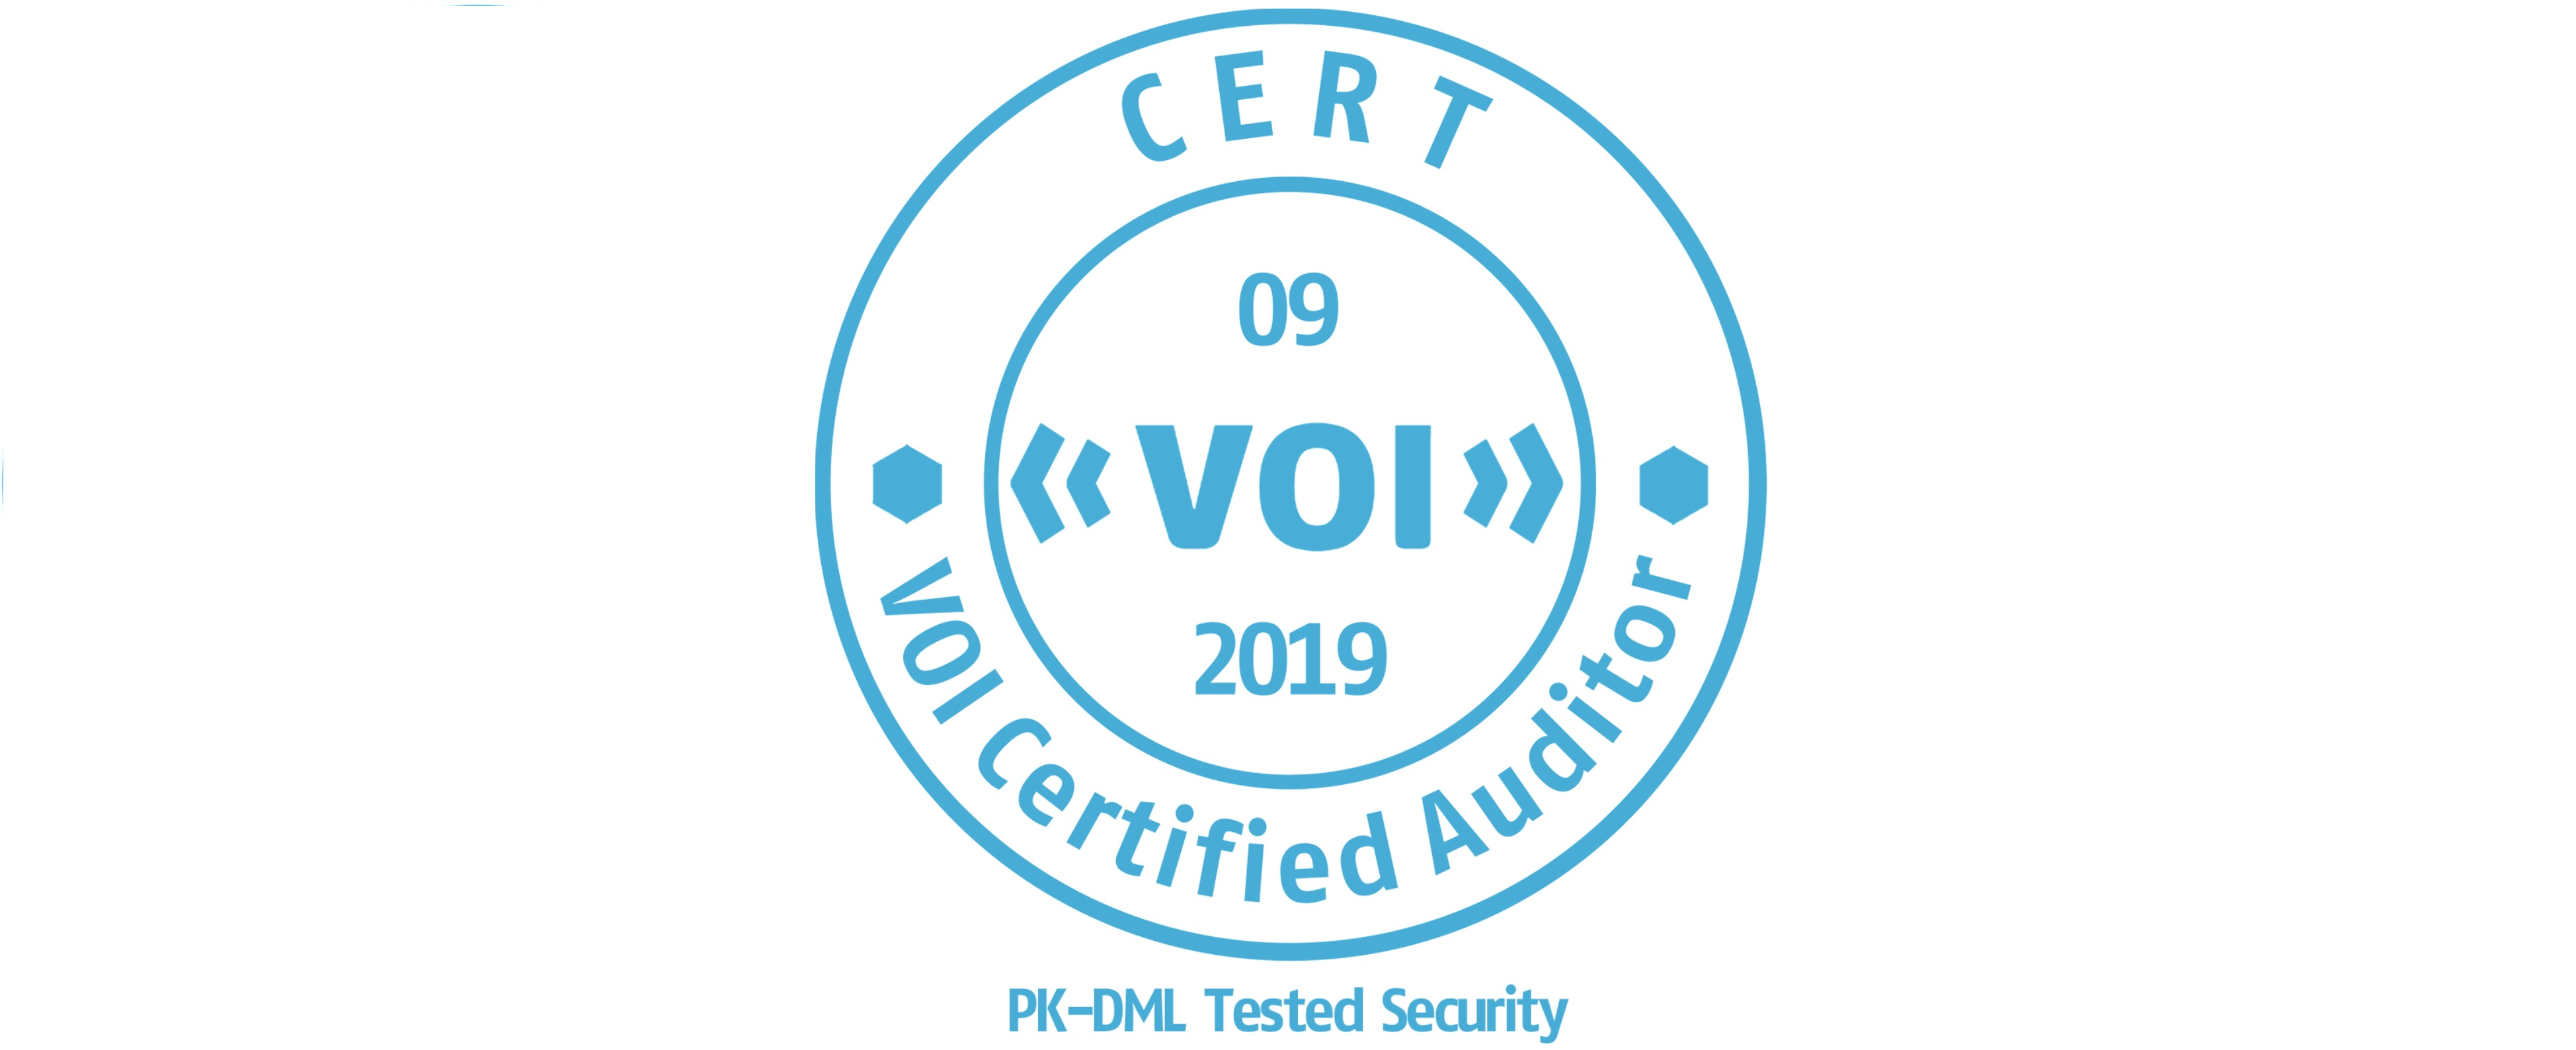 VOI Certified Auditor